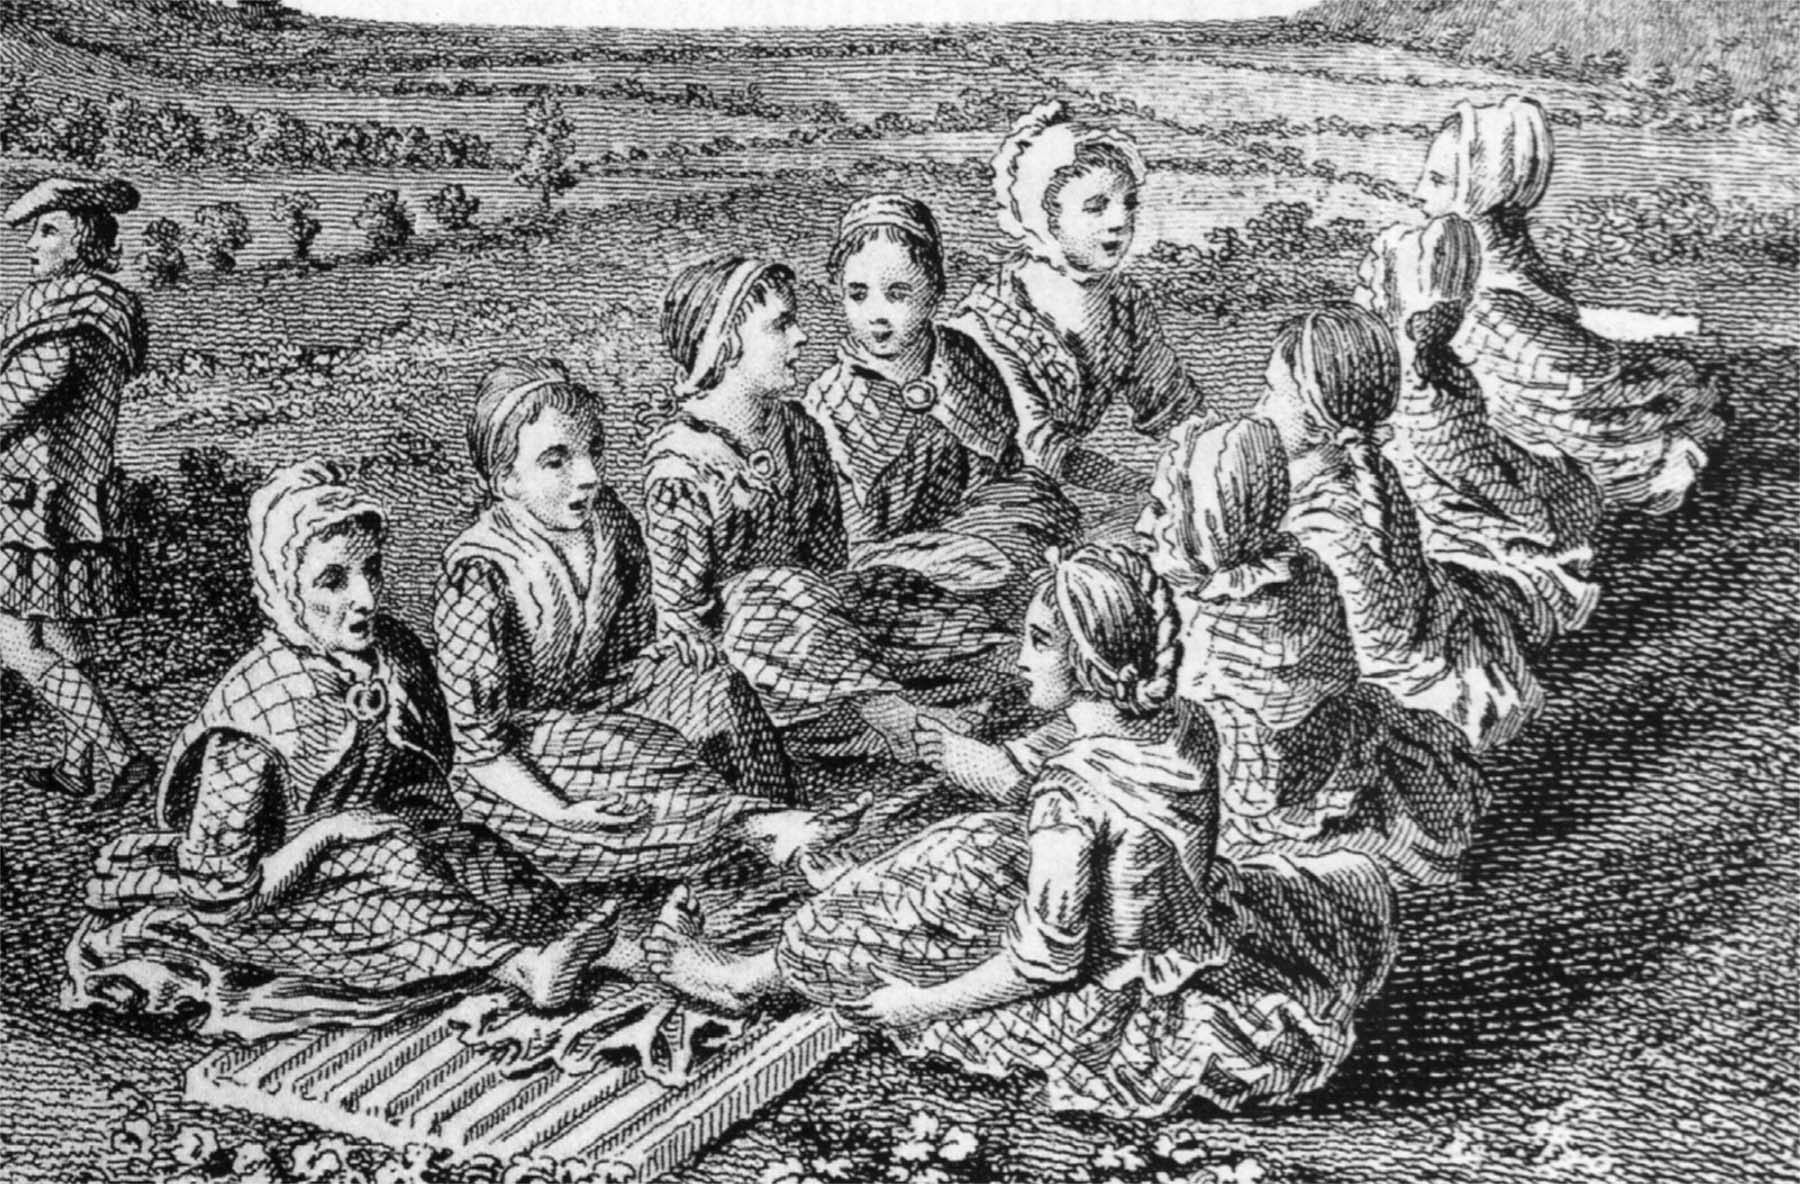 Waulking Wool in the 18th Century